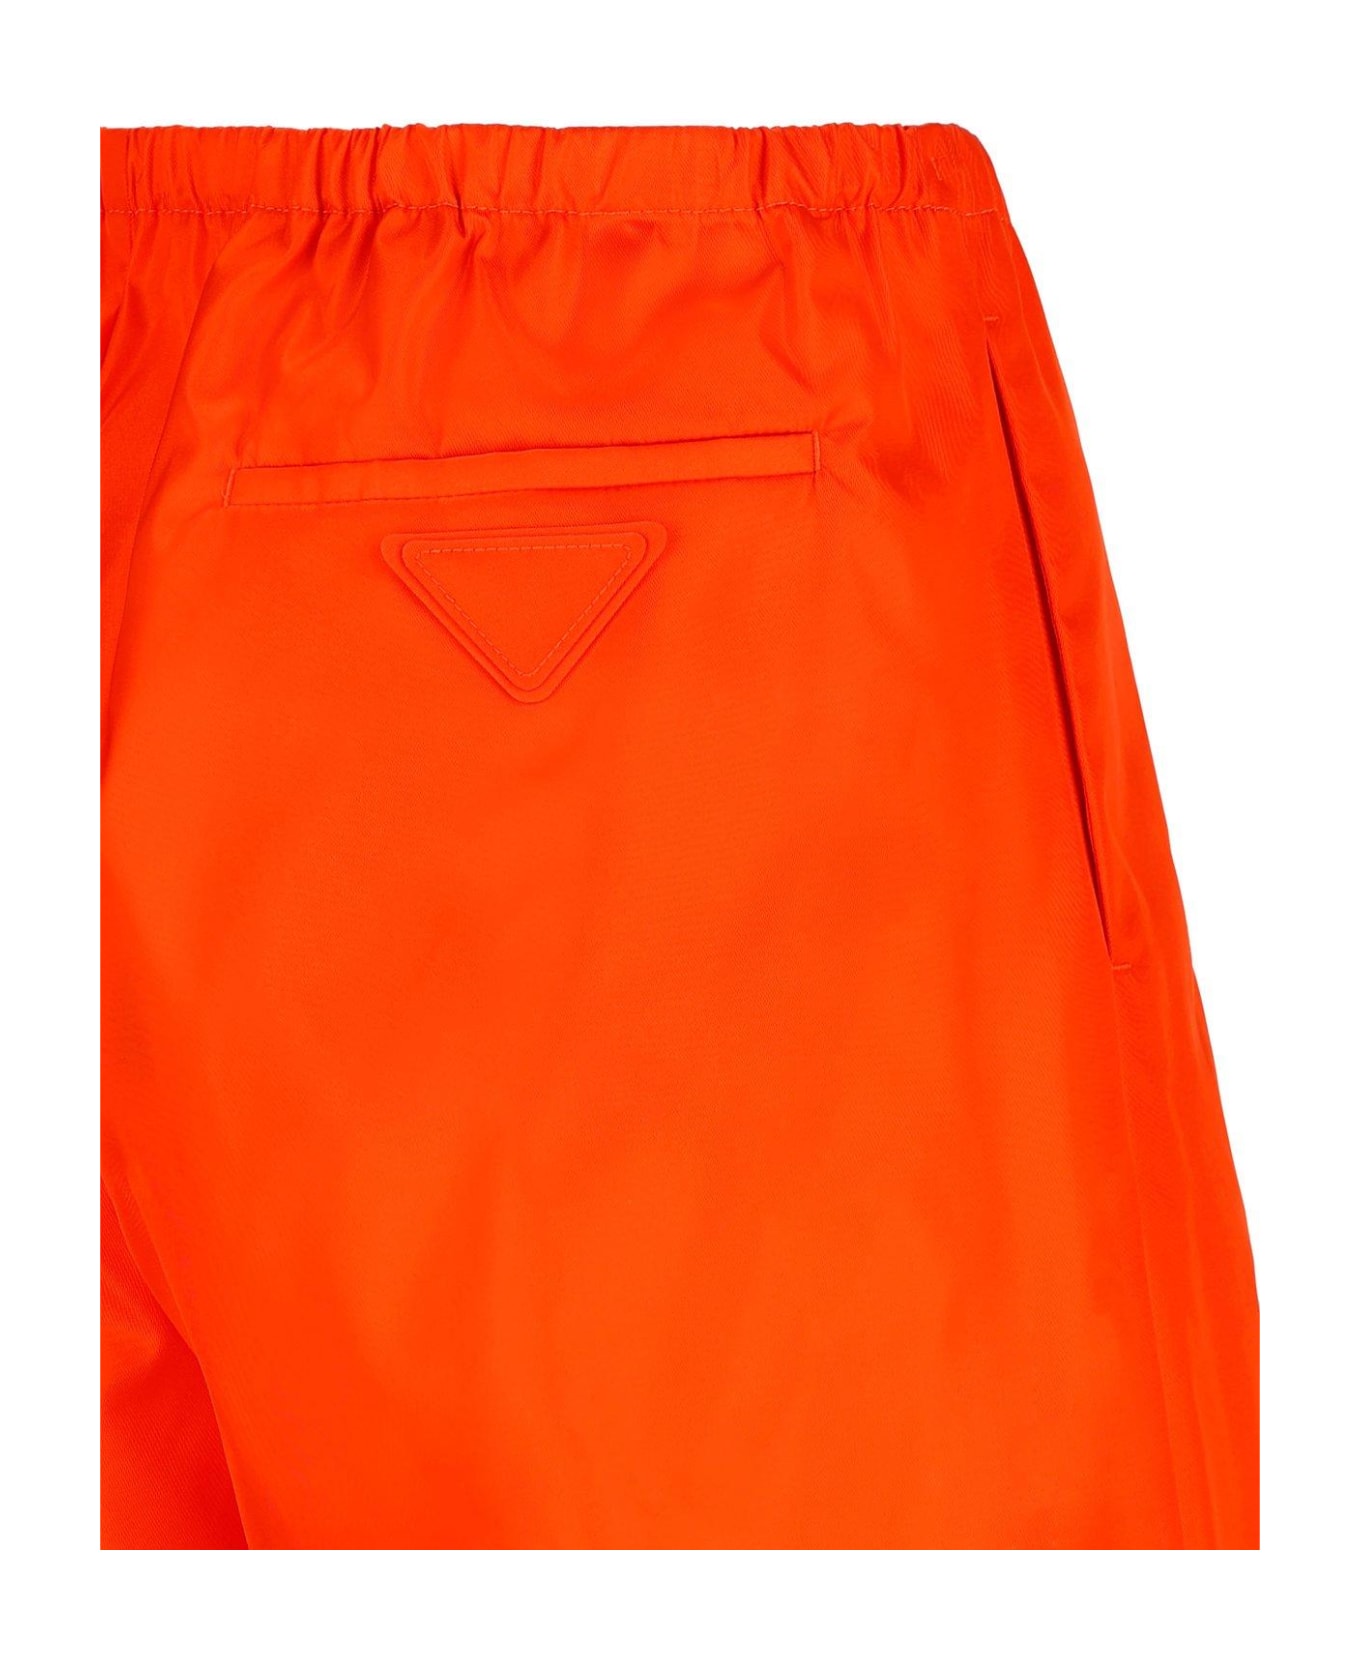 Prada High Waist Straight Leg Pants - Arancio